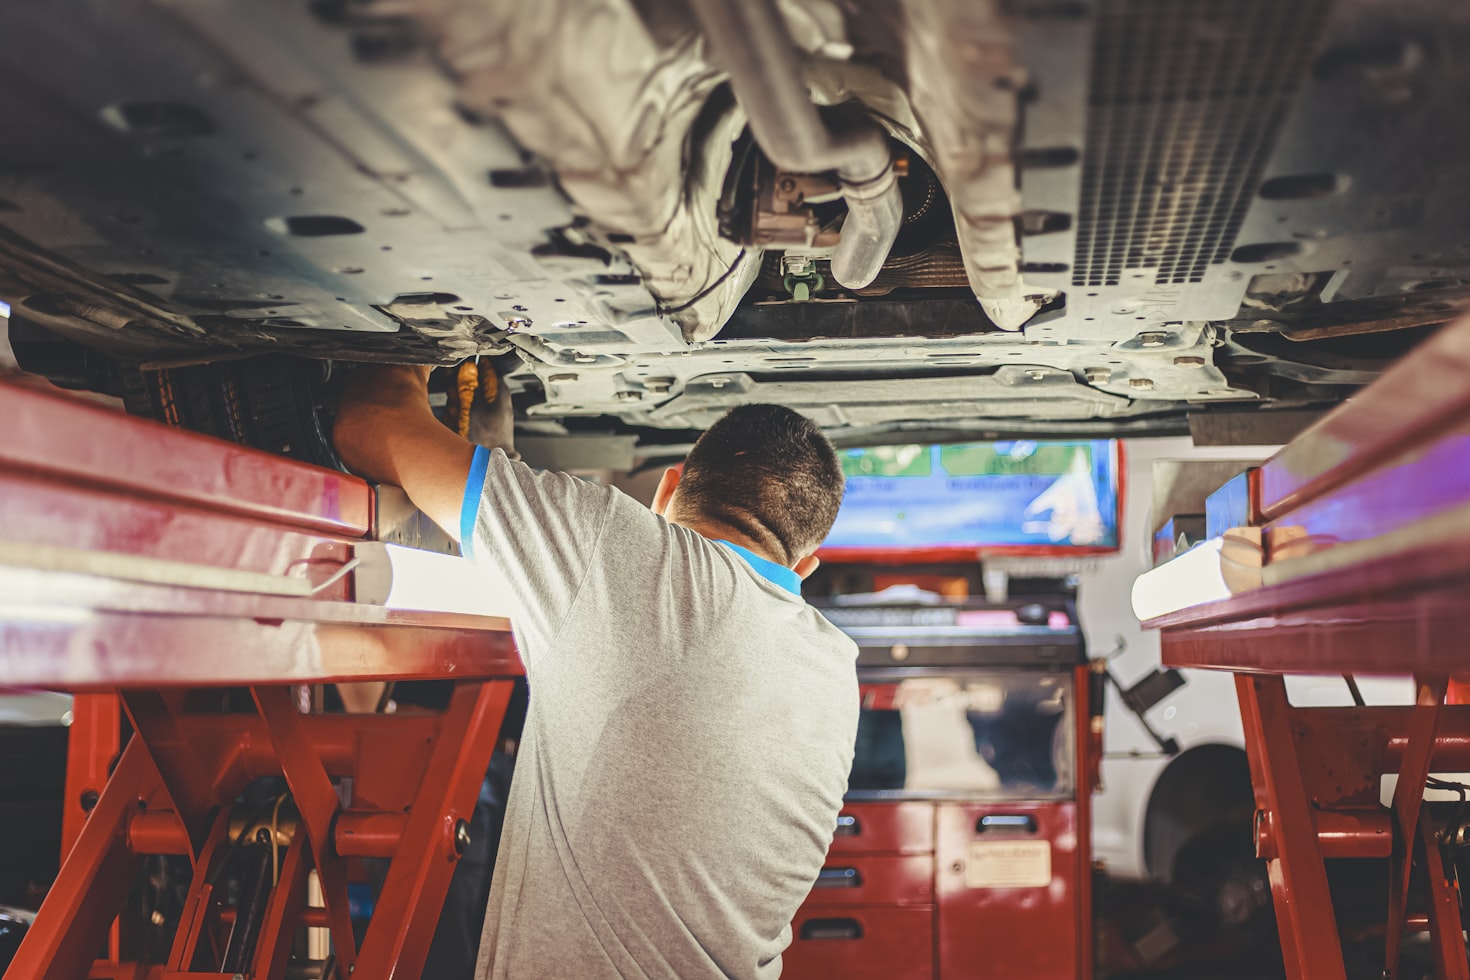 Mechanics warned of the life-threatening dangers of working under vehicles